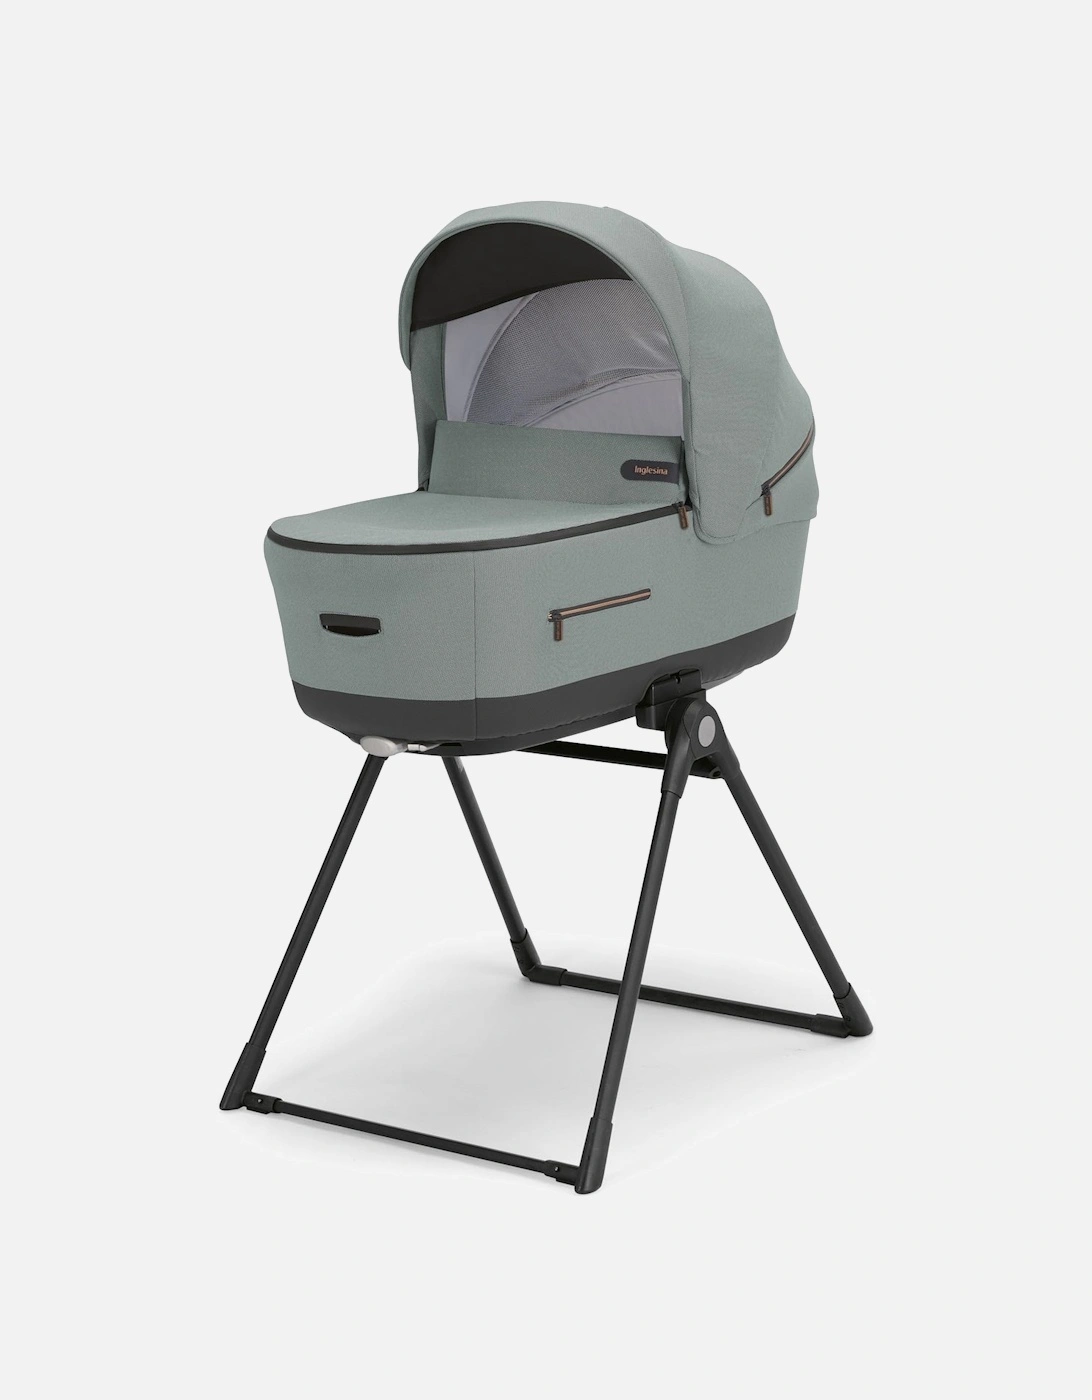 Aptica XT System Igloo Grey, Darwin Infant Recline car seat, 360° i-Size base, Black chassis